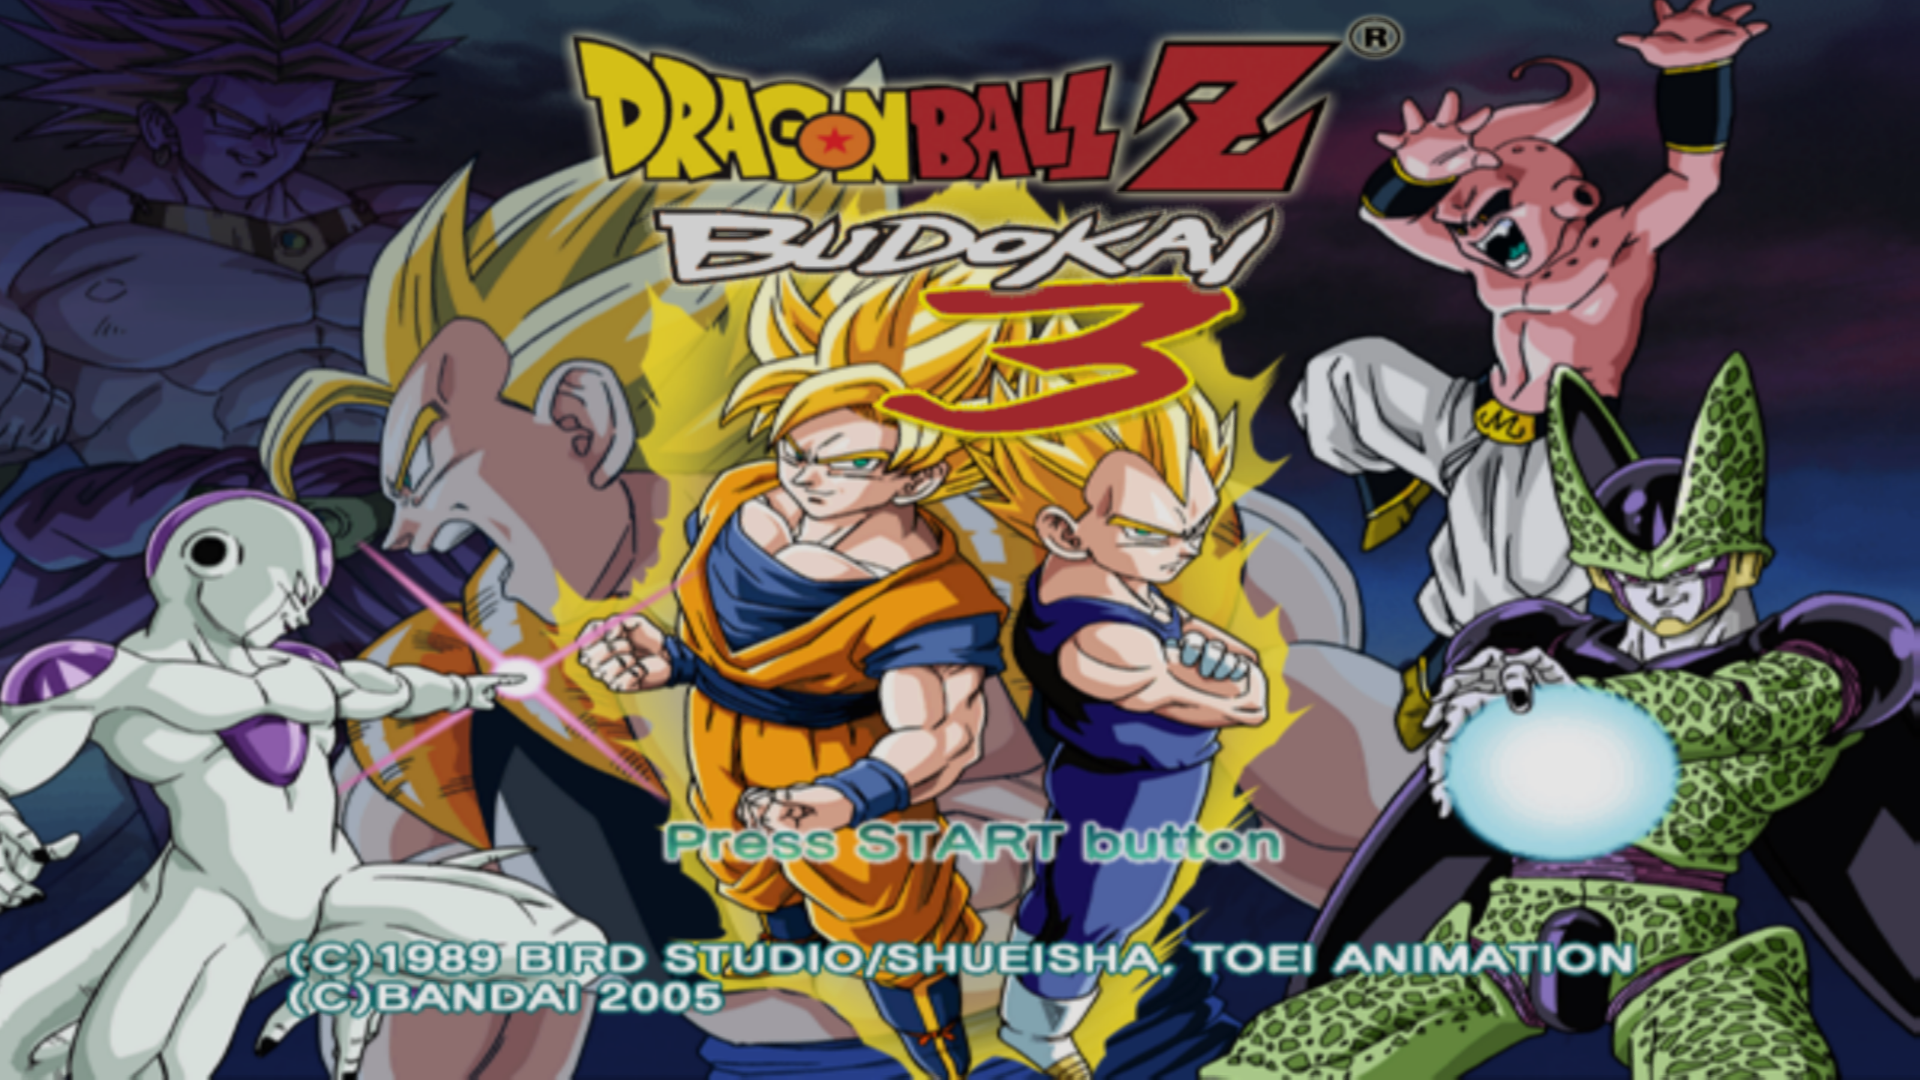  Dragon Ball Z Budokai Tenkaichi 3 (Renewed) : Video Games